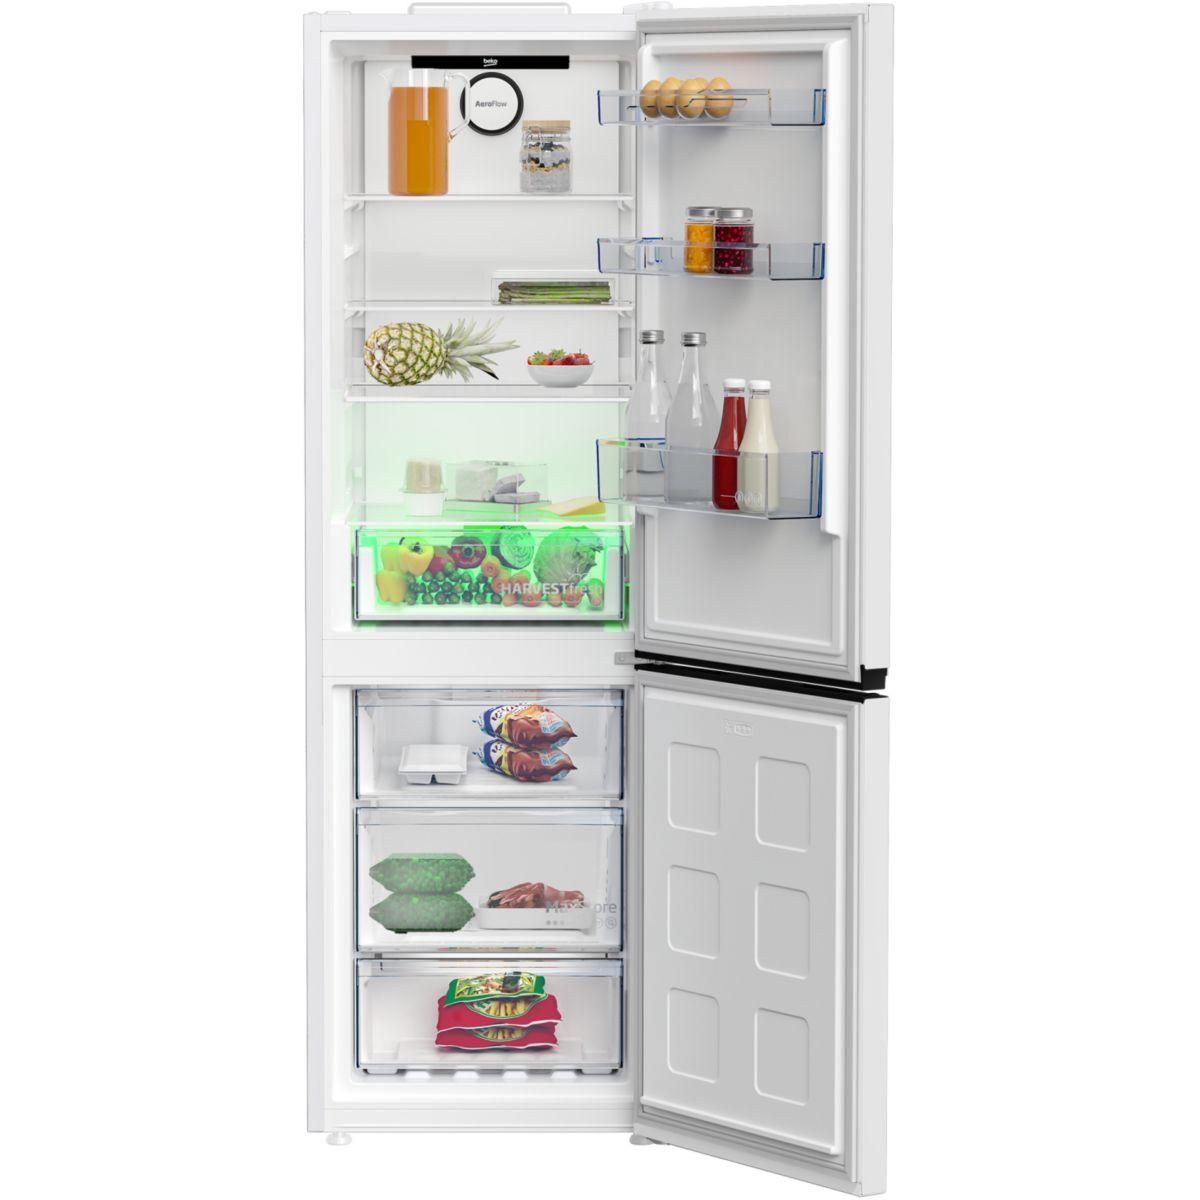 Réfrigérateur combiné BEKO B3RCNE364HW 316 L